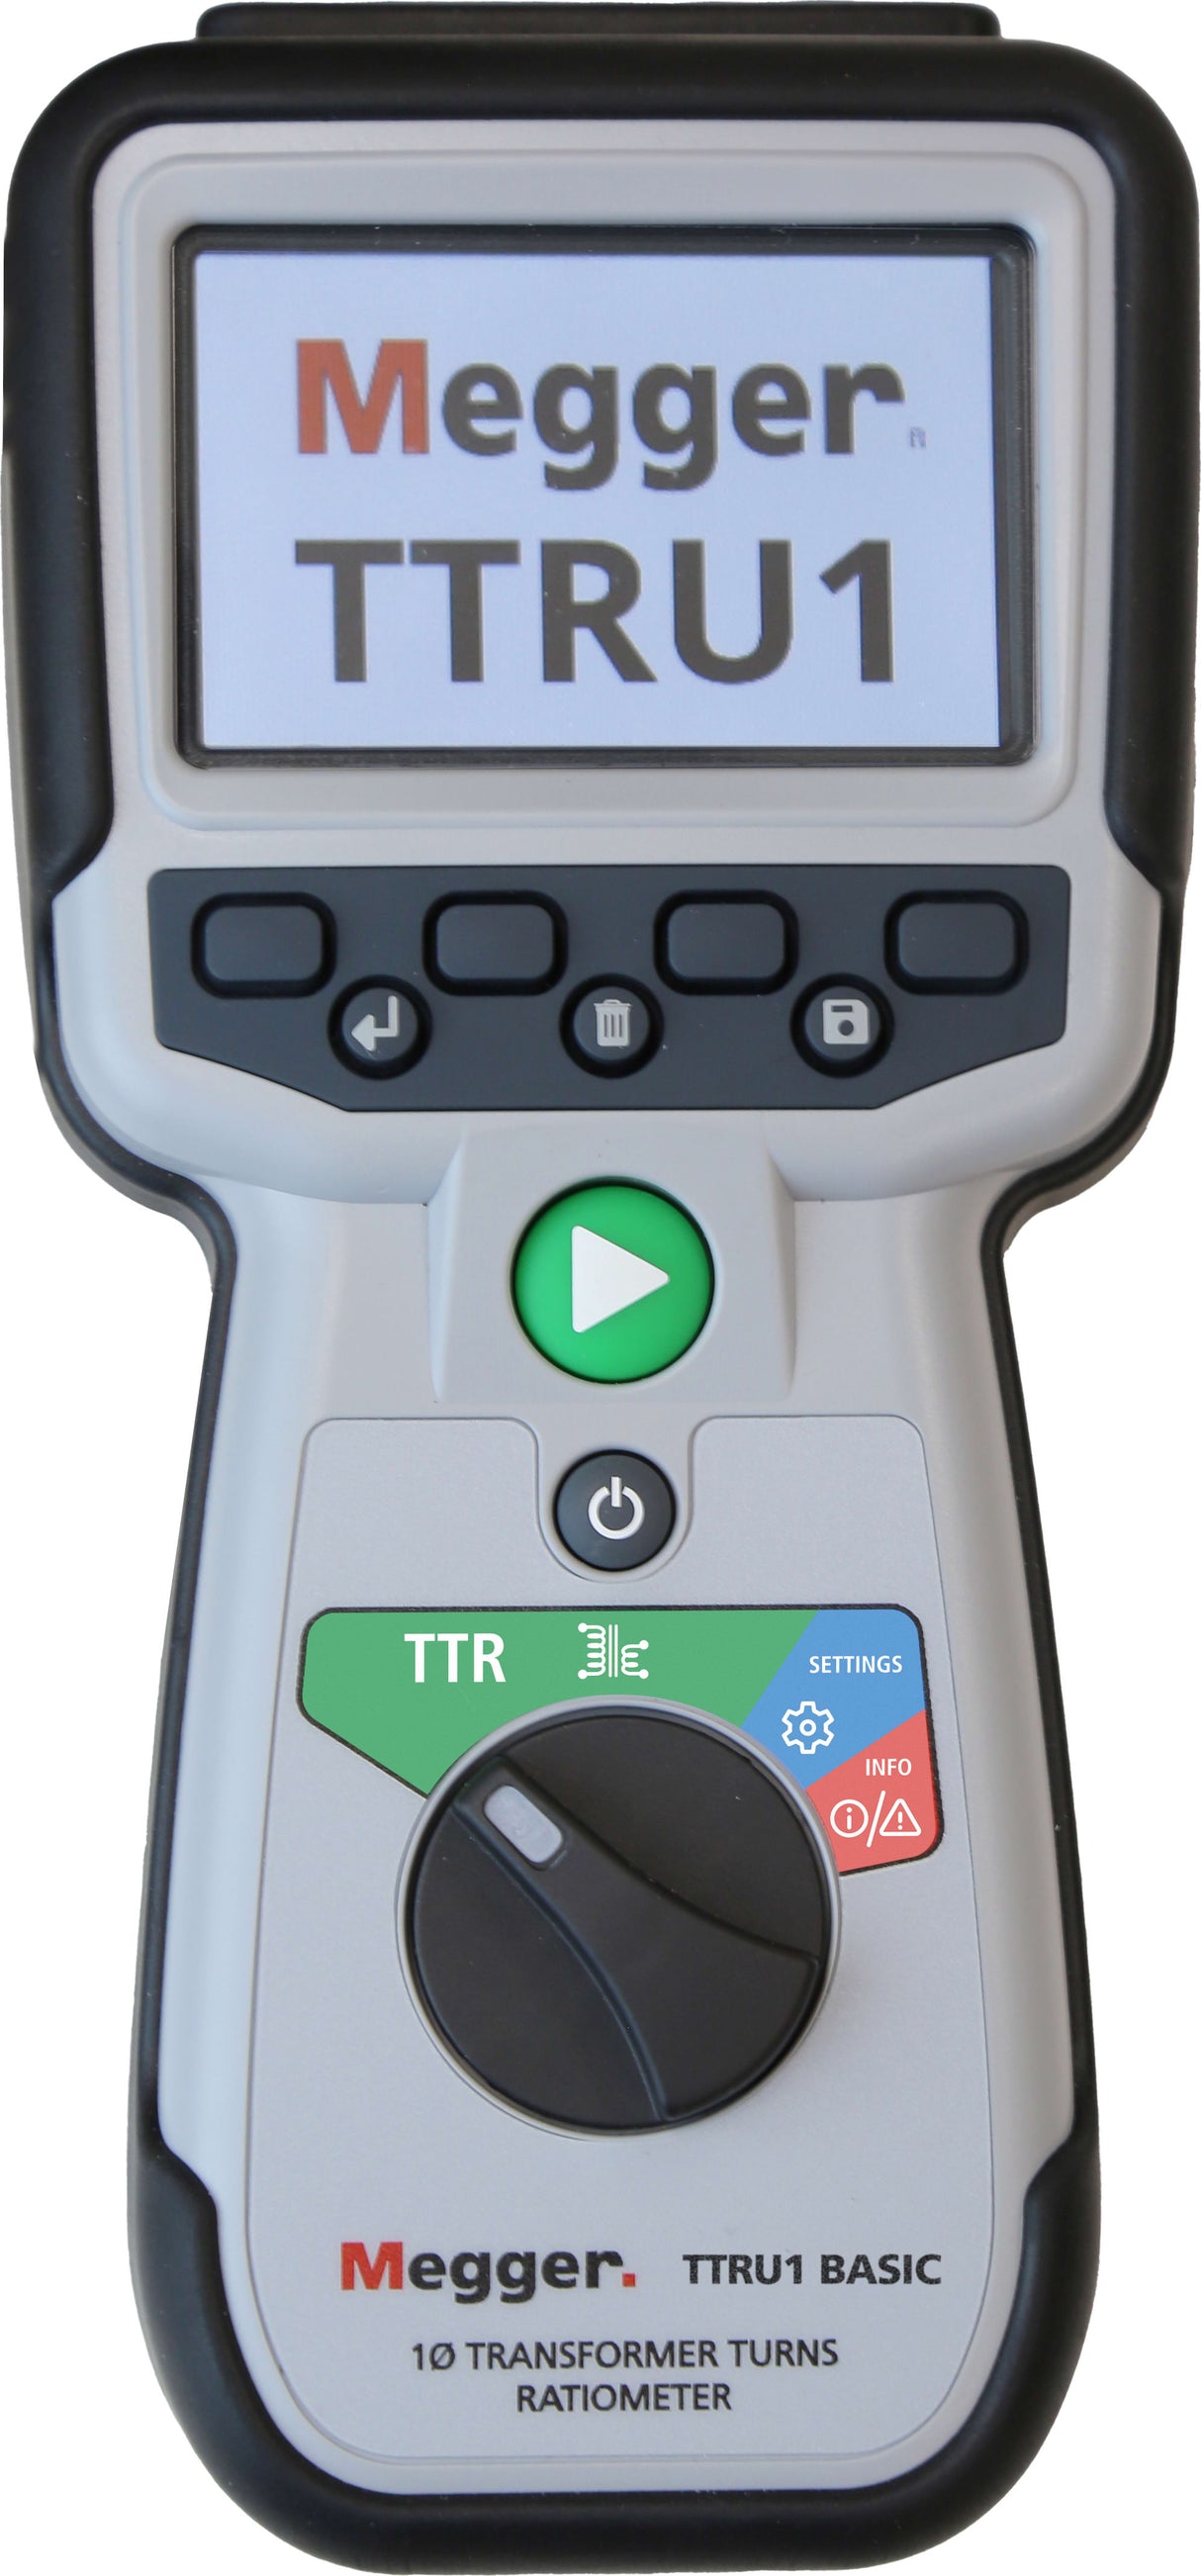 Megger TTRU1 Handheld Transformer Turns Ratiometer